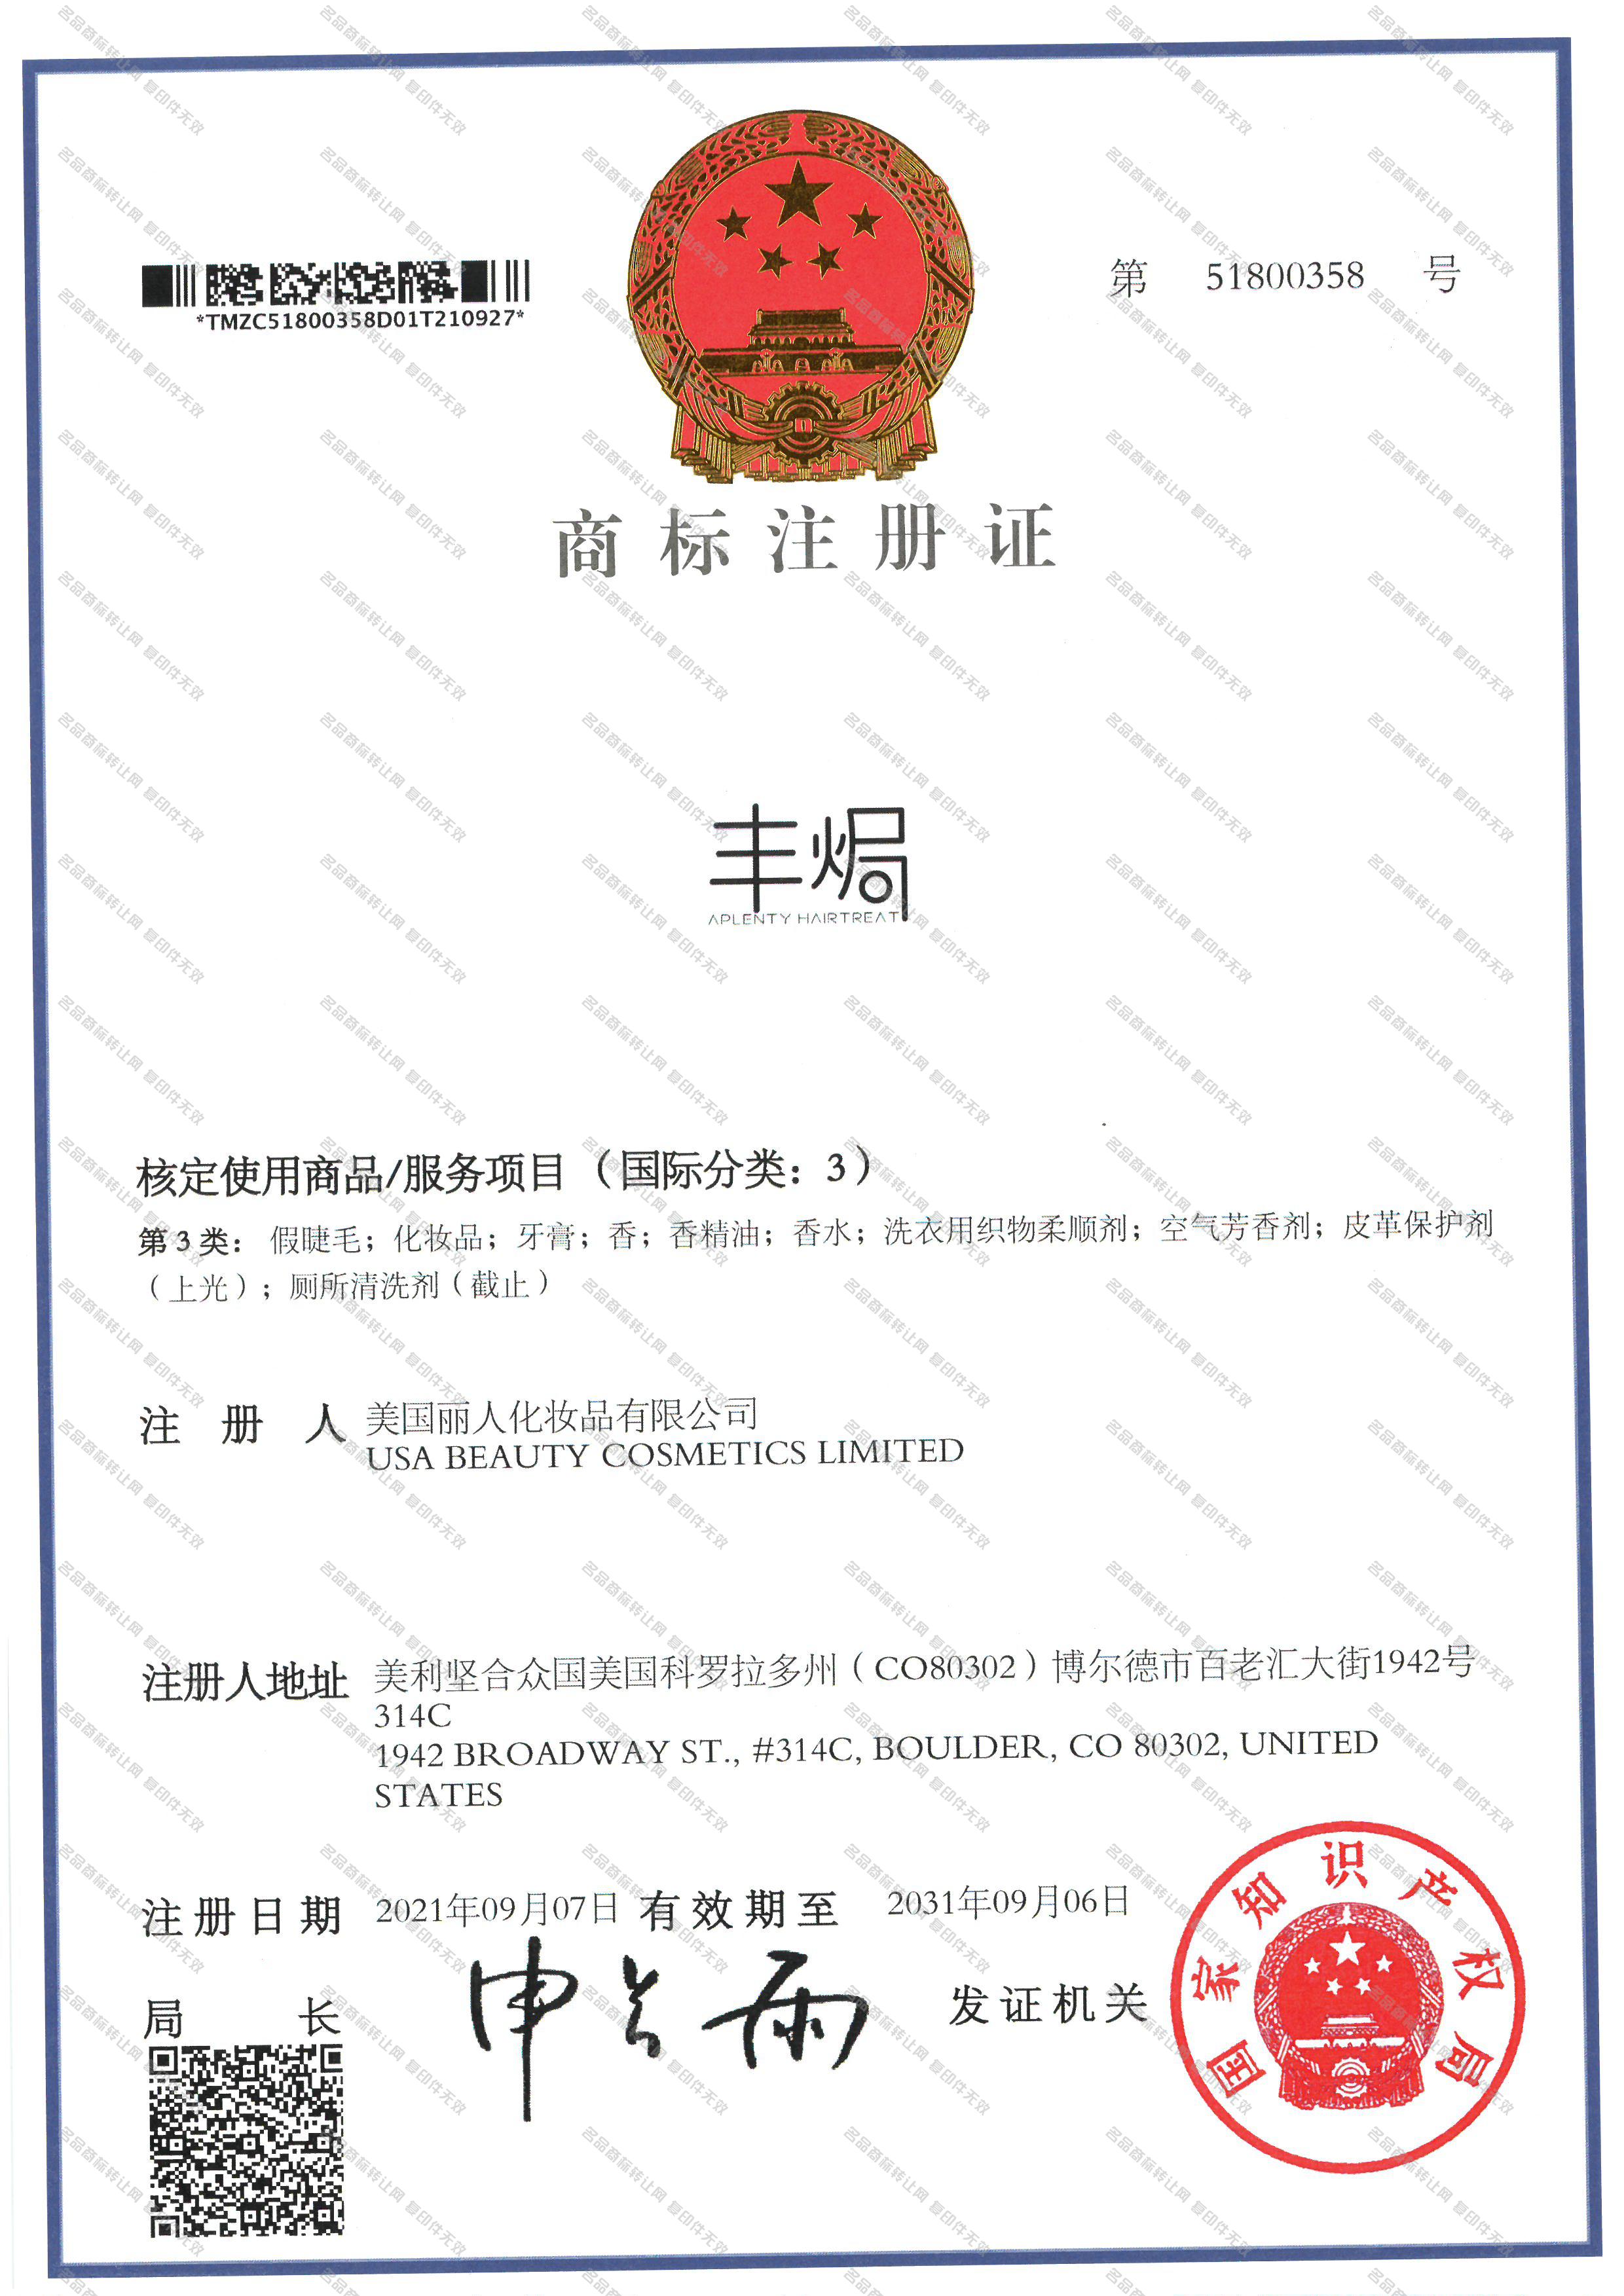 丰焗 APLENTY HAIRTREAT注册证